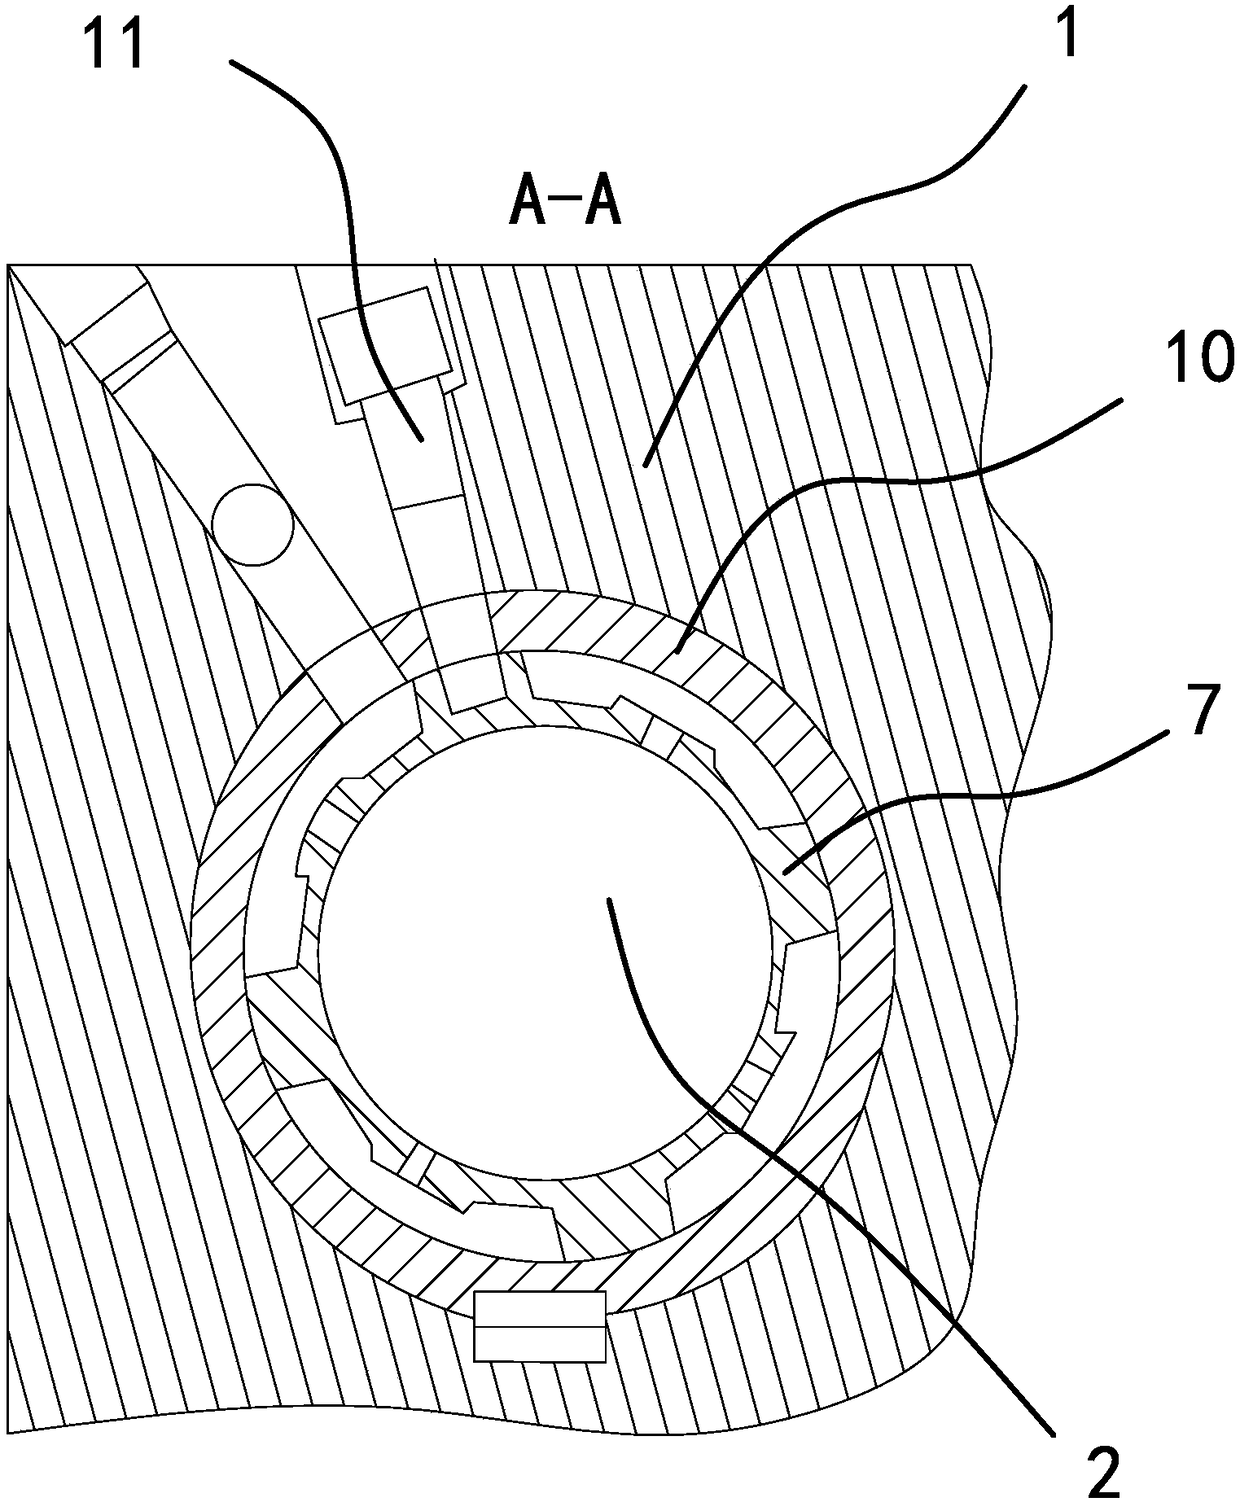 Spindle structure on precision grinder